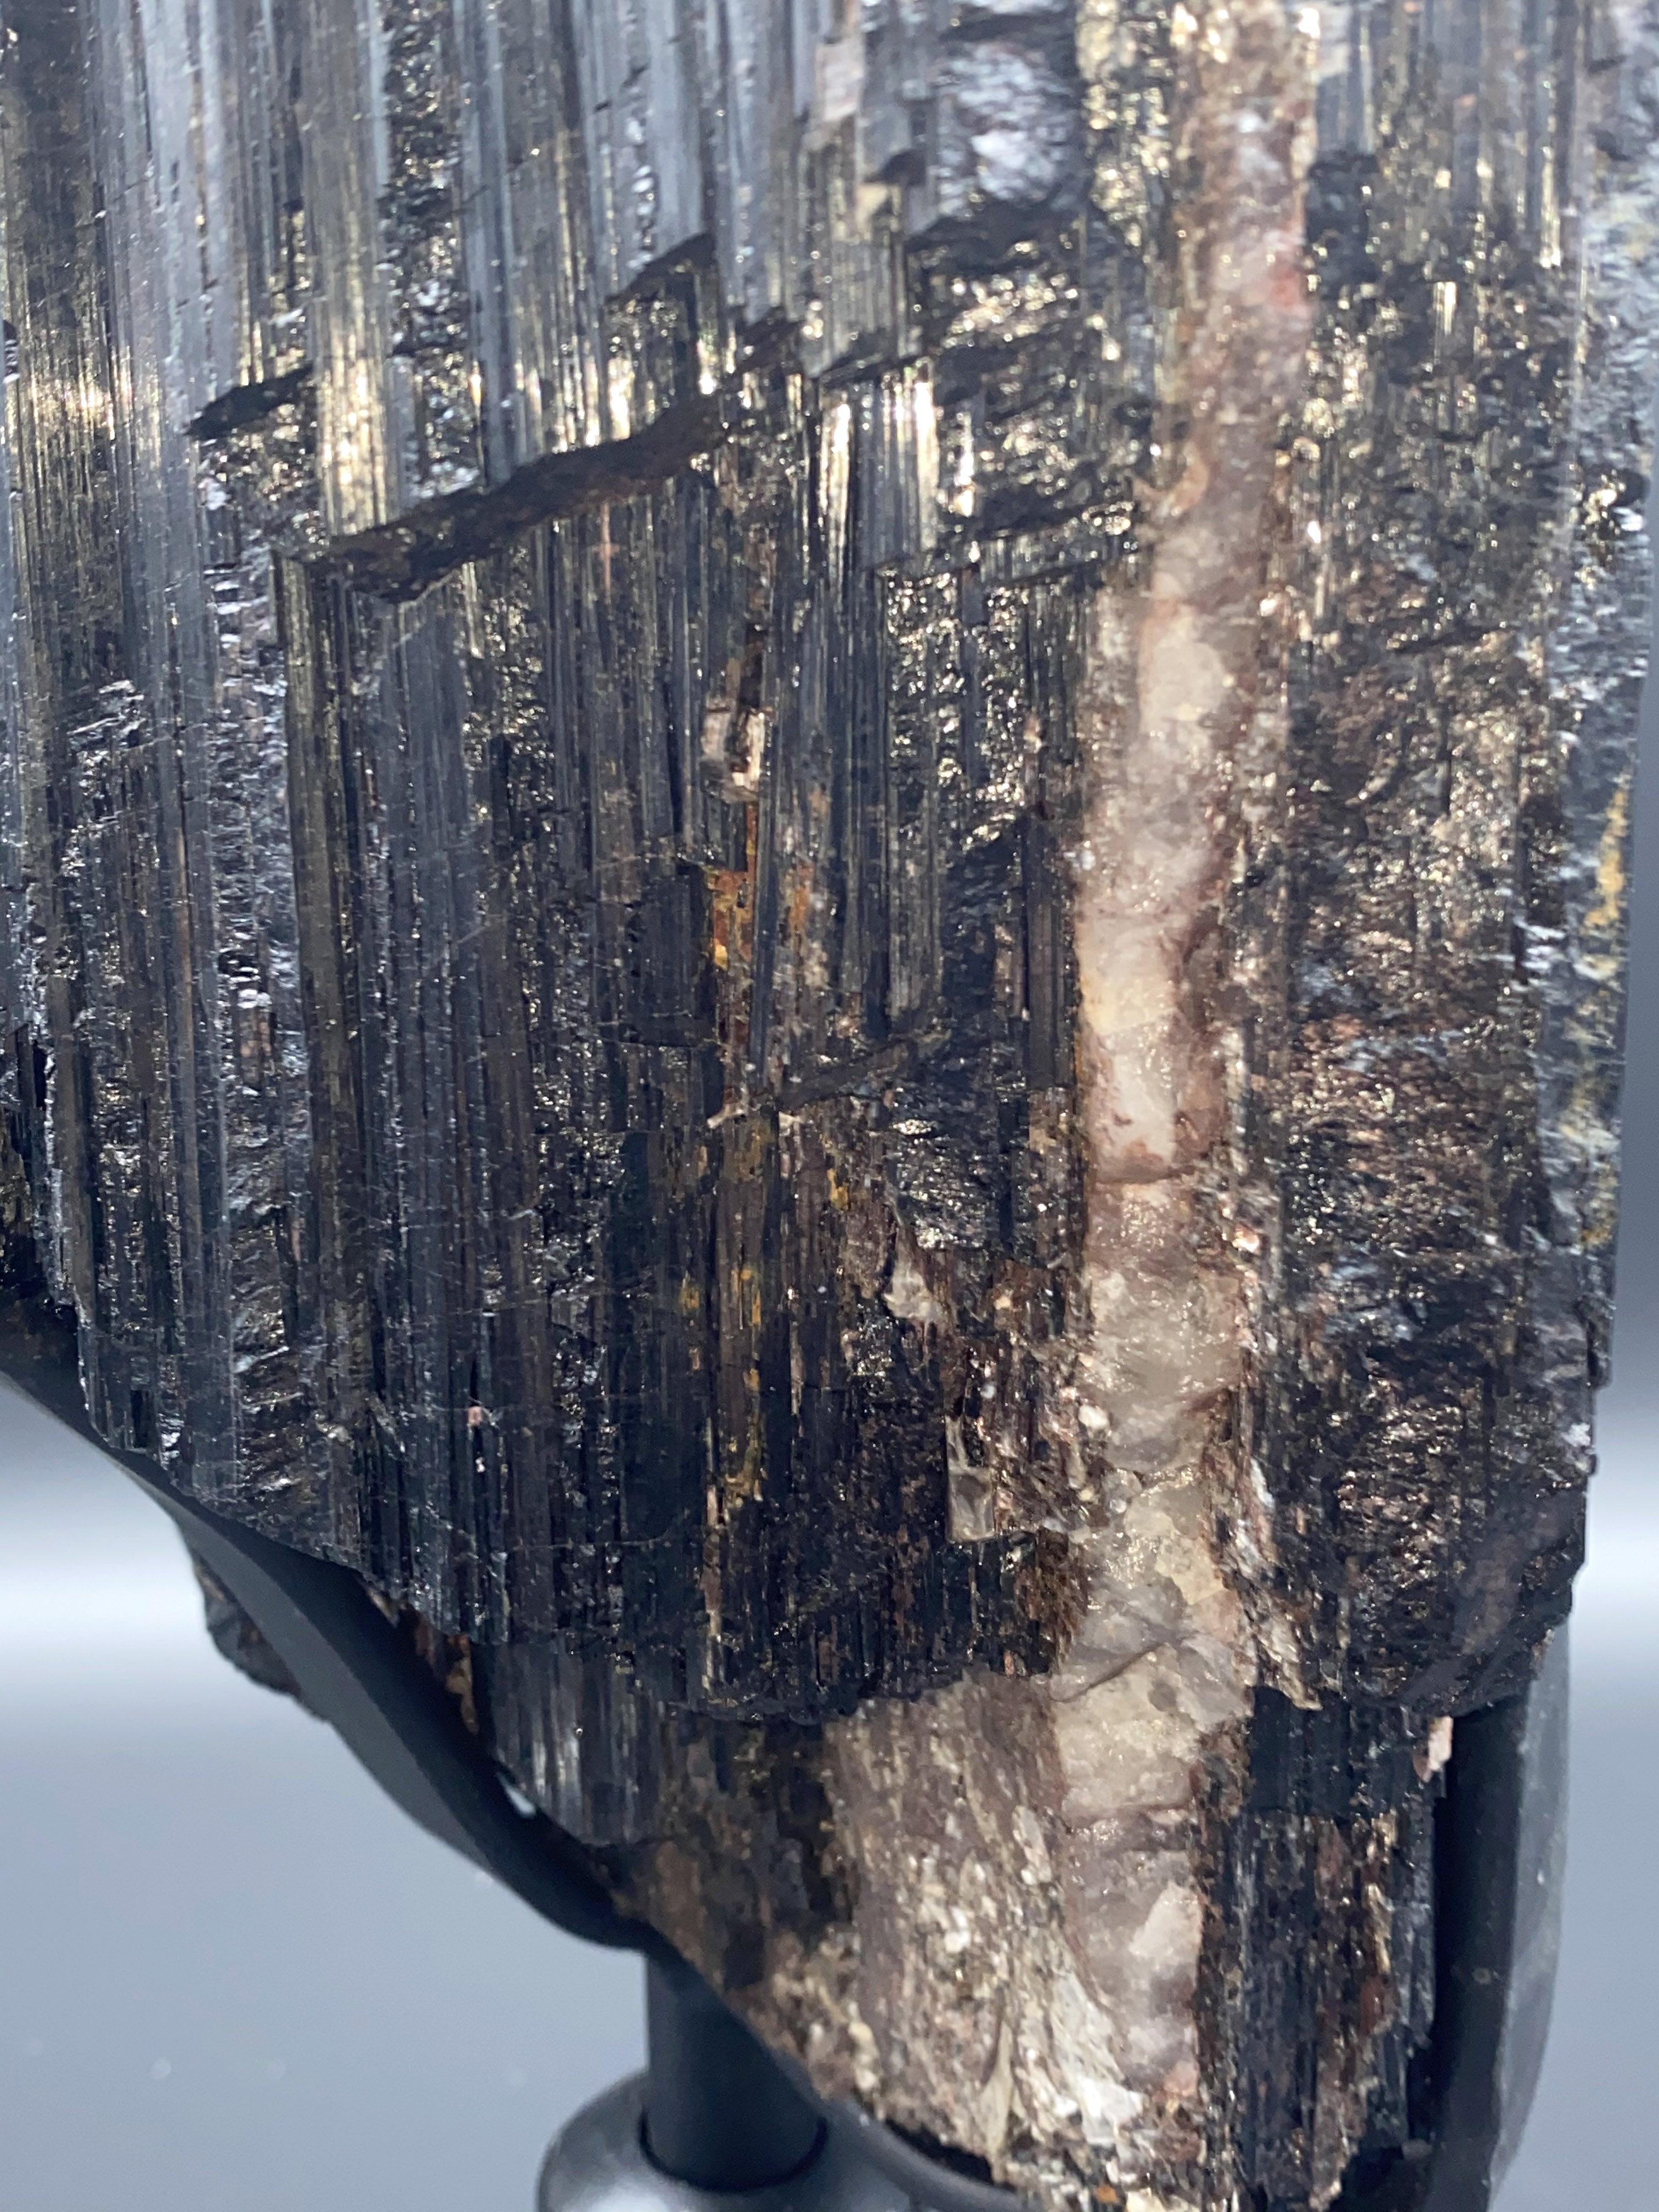 77/lb Large Black Tourmaline Crystal Specimen #018 With white quartz, calcite and mica